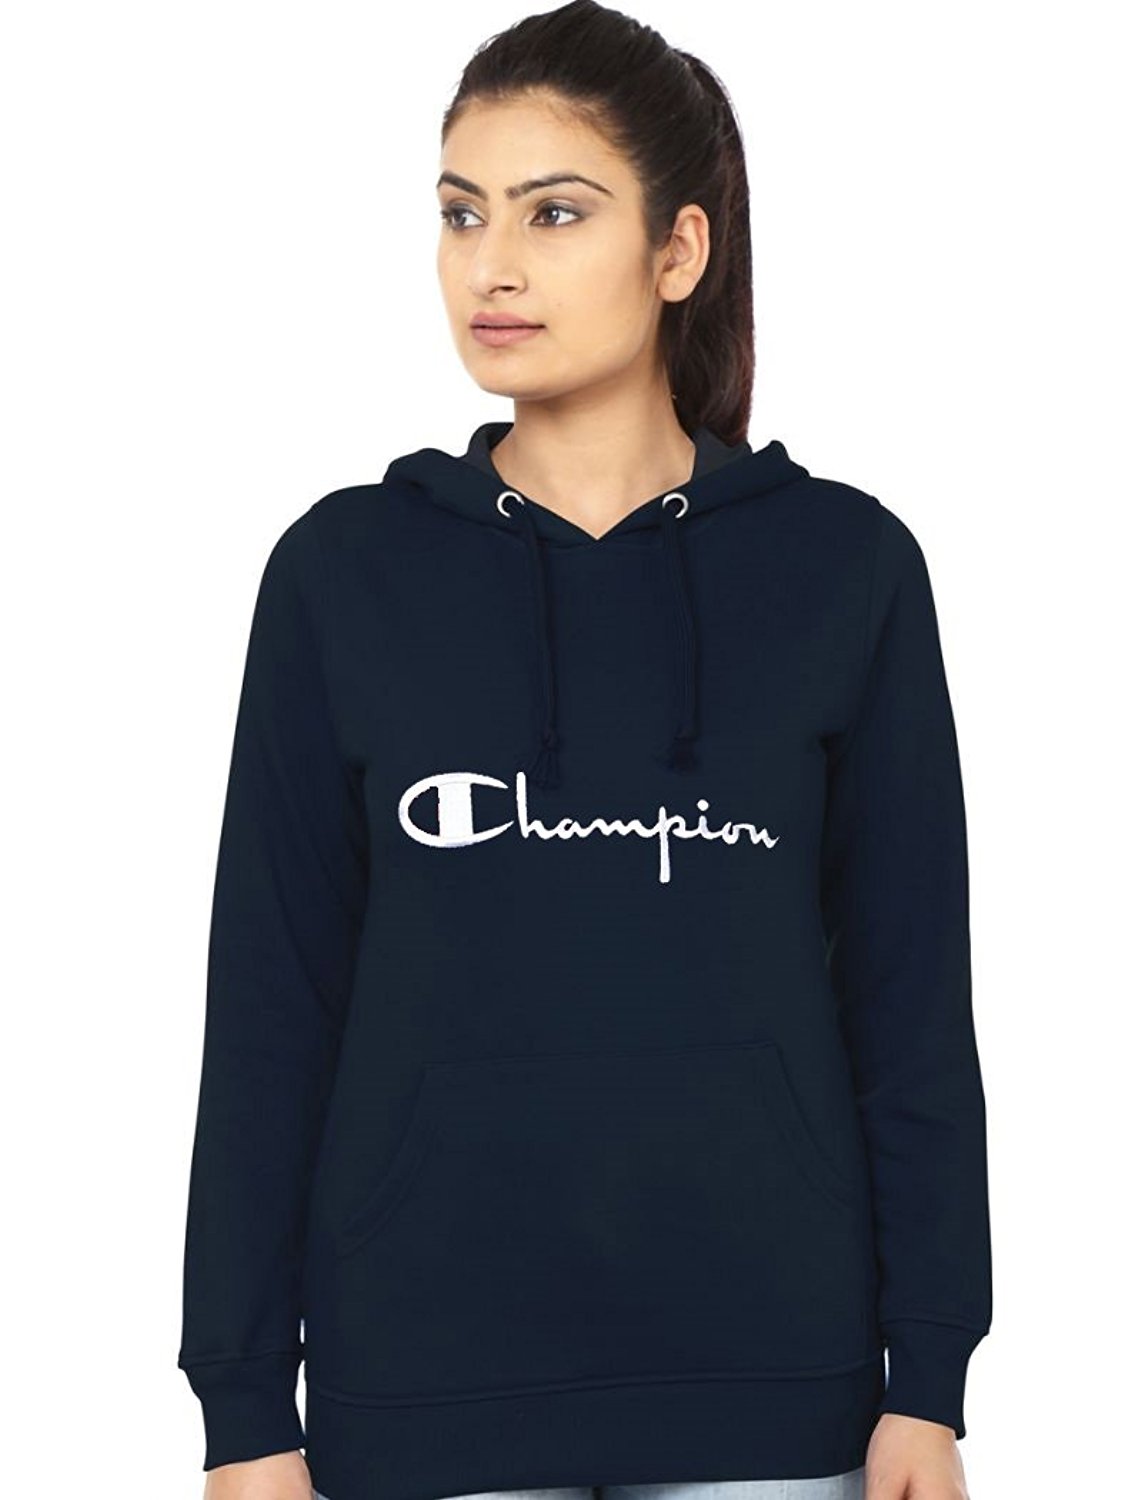 Buy Champion sweatshirt for women Online @ ₹350 from ShopClues